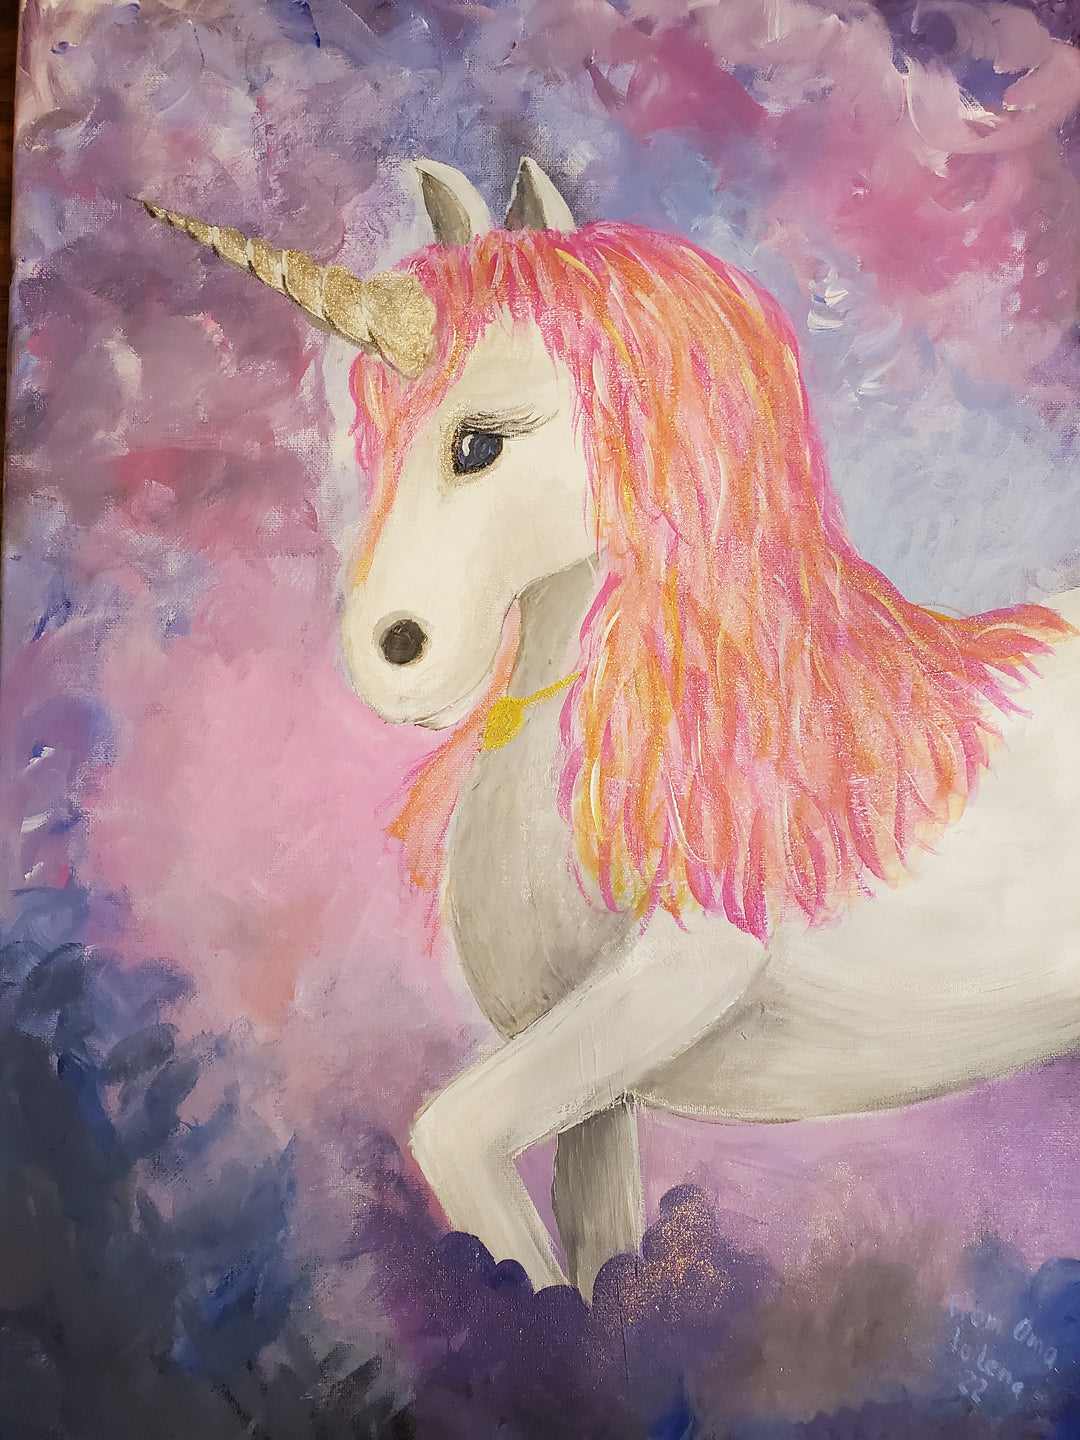 Unafraid Mature Unicorn in the Mist - Acrylic Painting - Alexa Martha Designs   